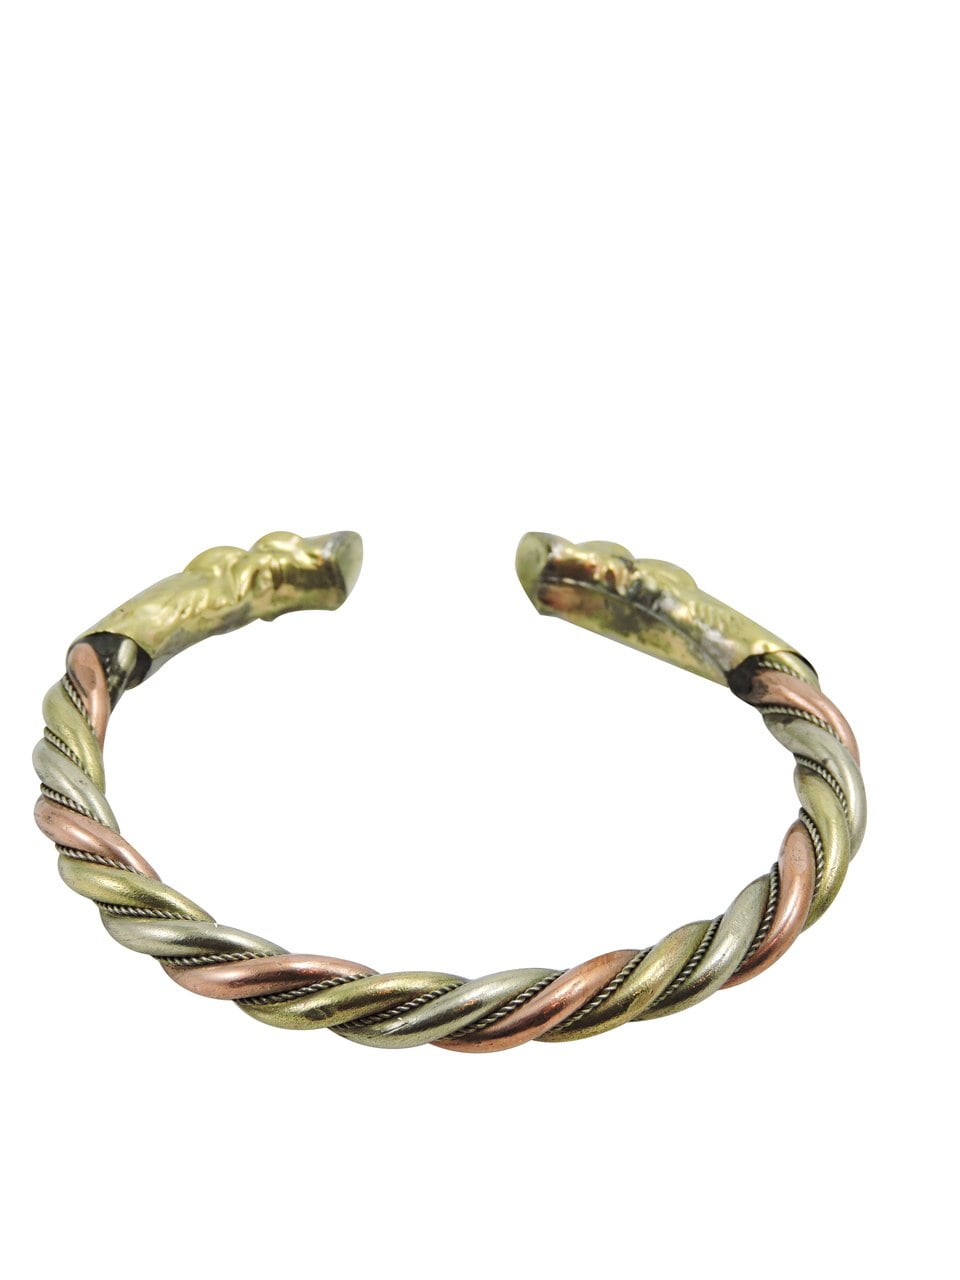 Metal cuff bracelet. Approximately 2.5